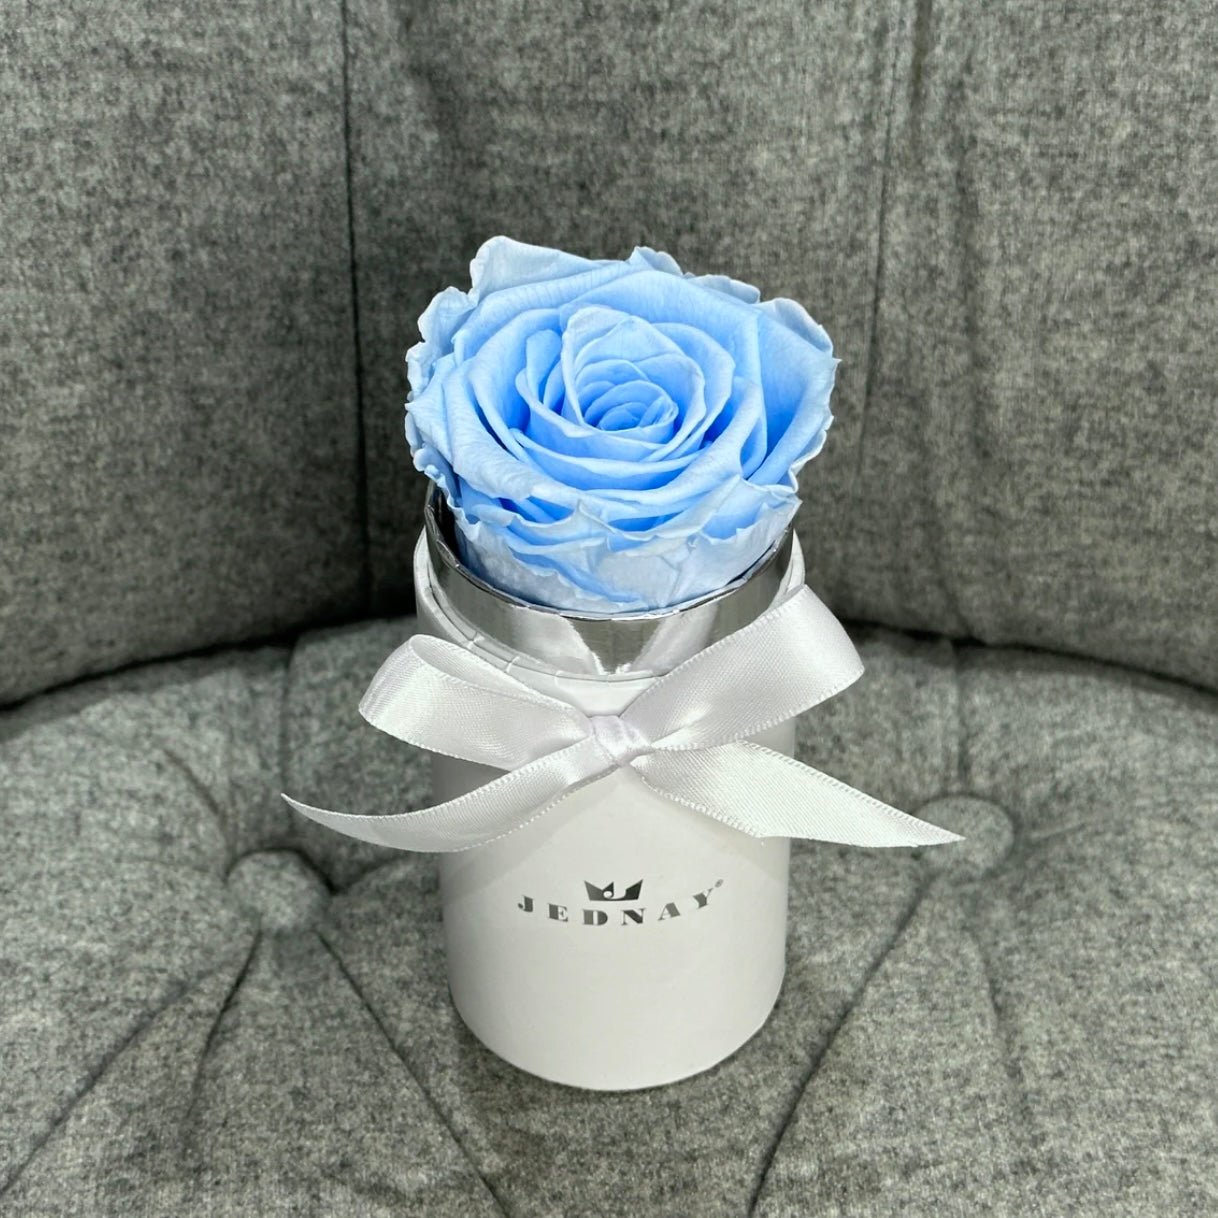 Single Classic White Forever Rose Box - Sky blue Eternal Rose - Jednay Roses